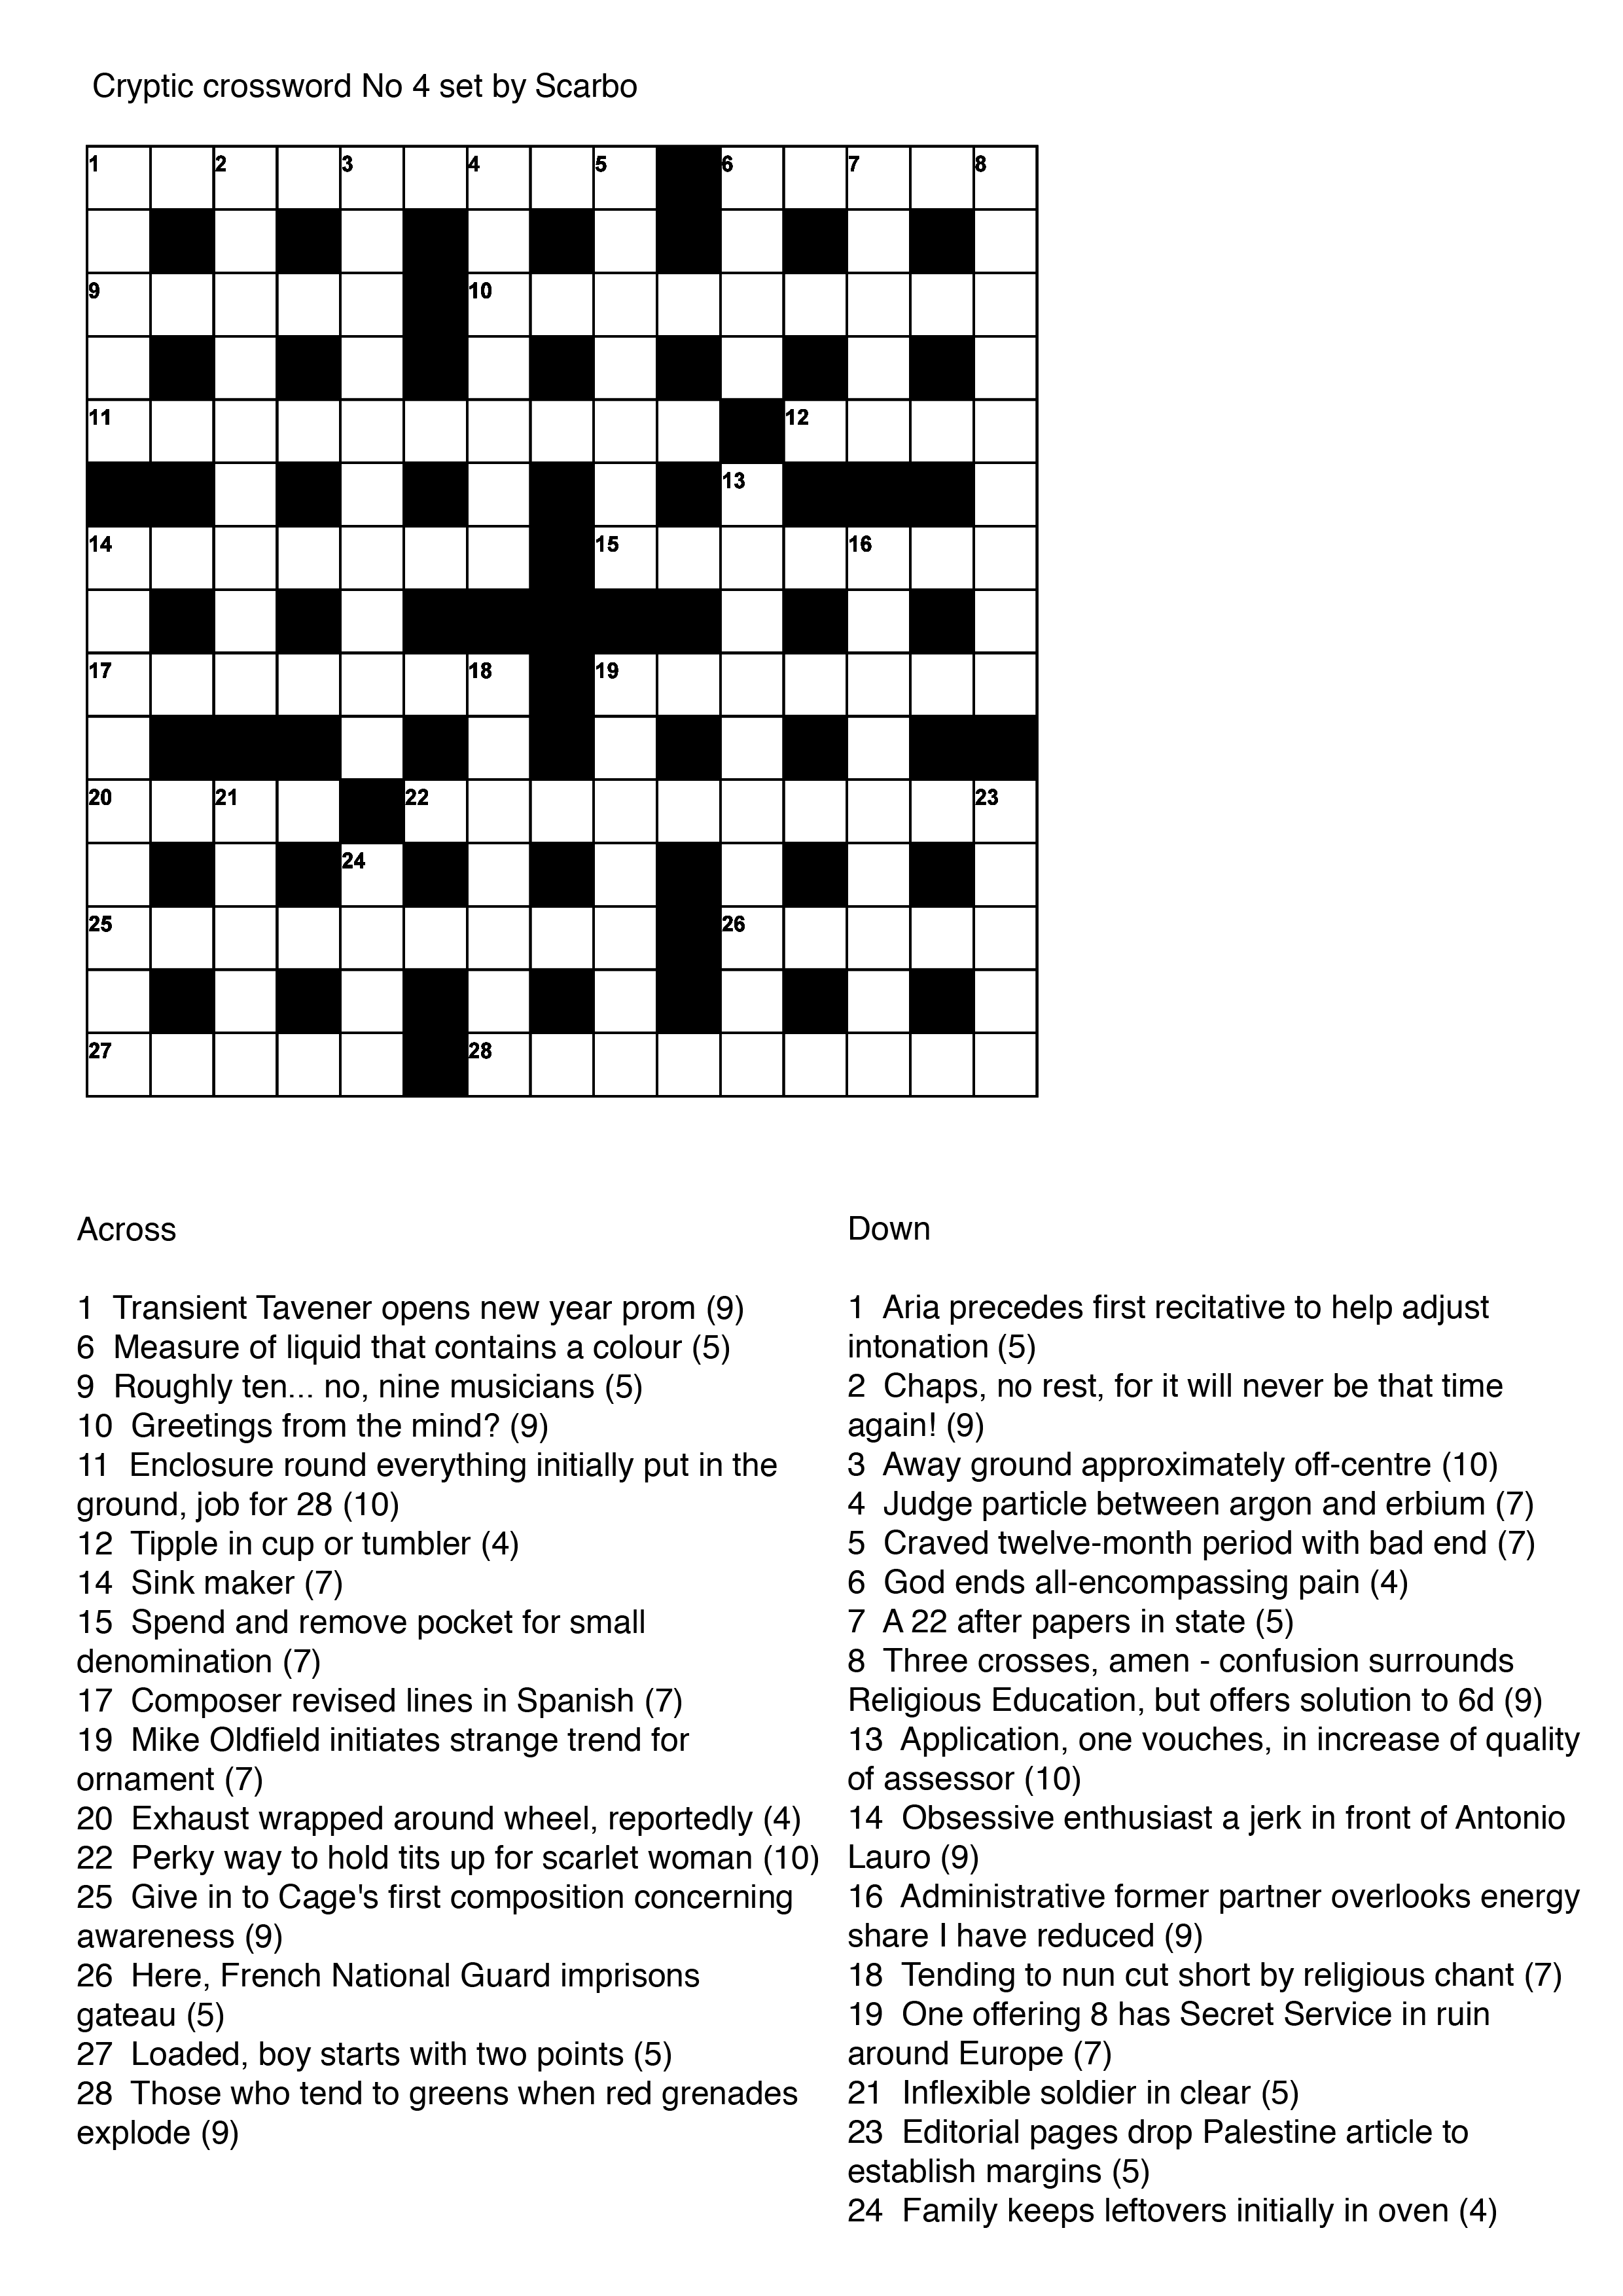 Cryptic Crossword No 4